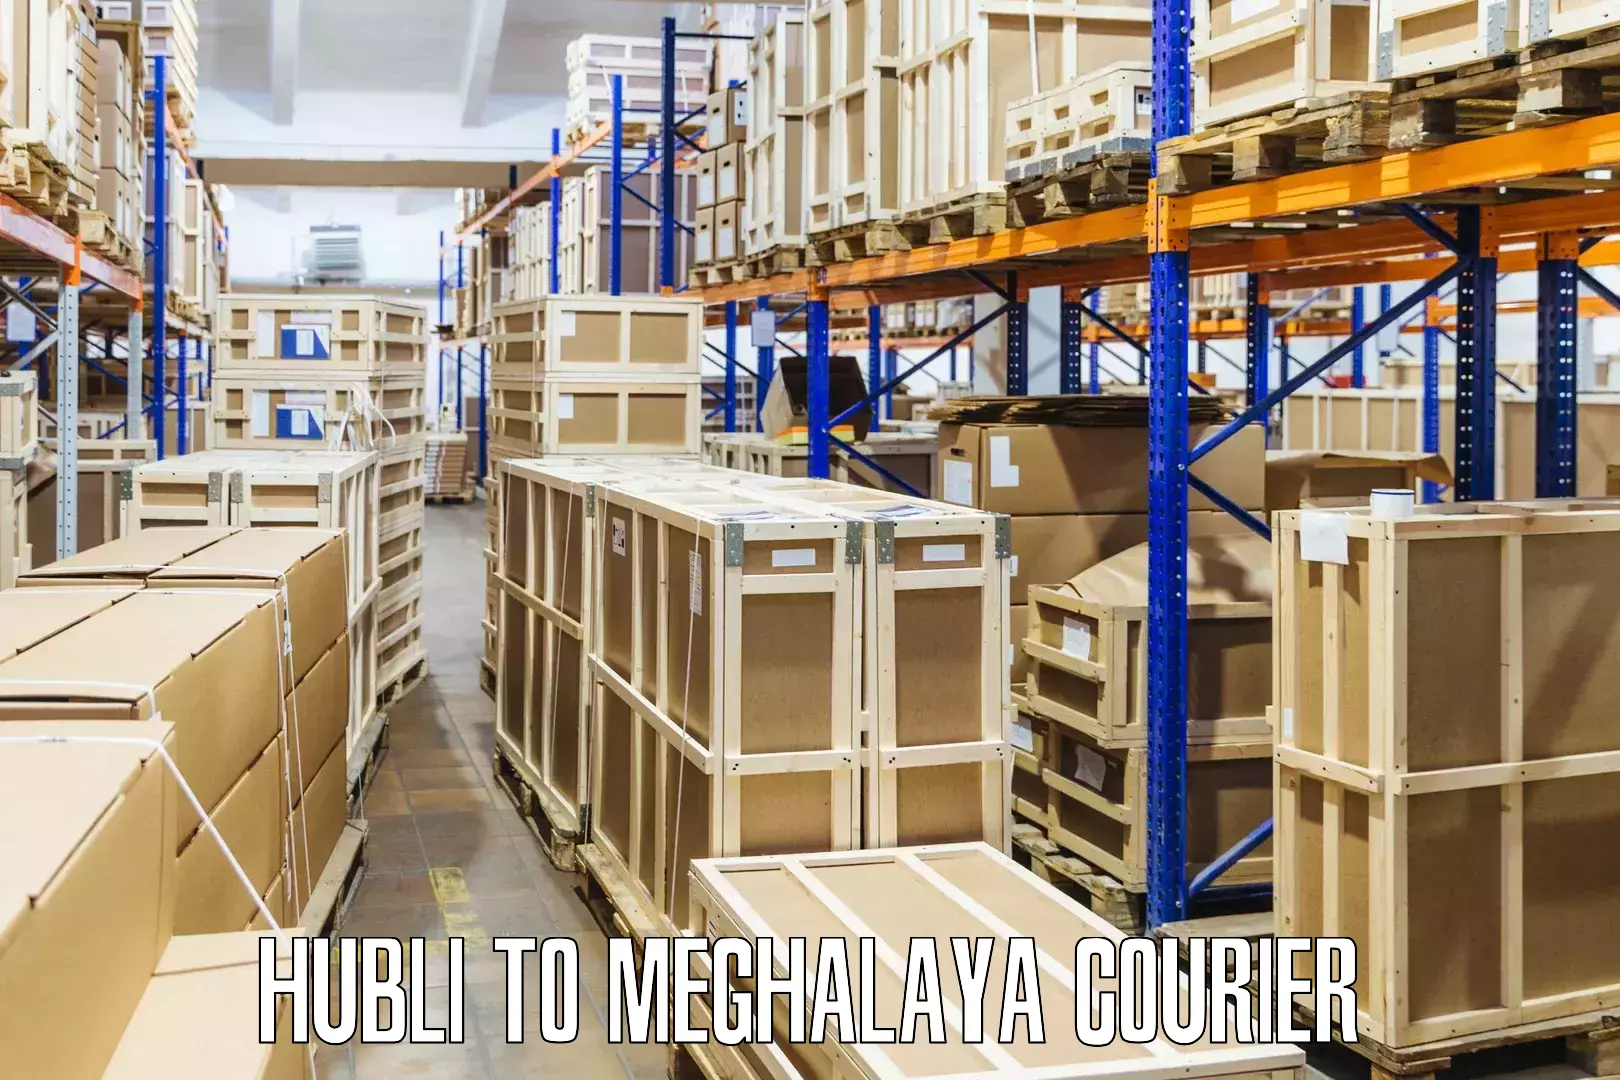 User-friendly courier app Hubli to Meghalaya